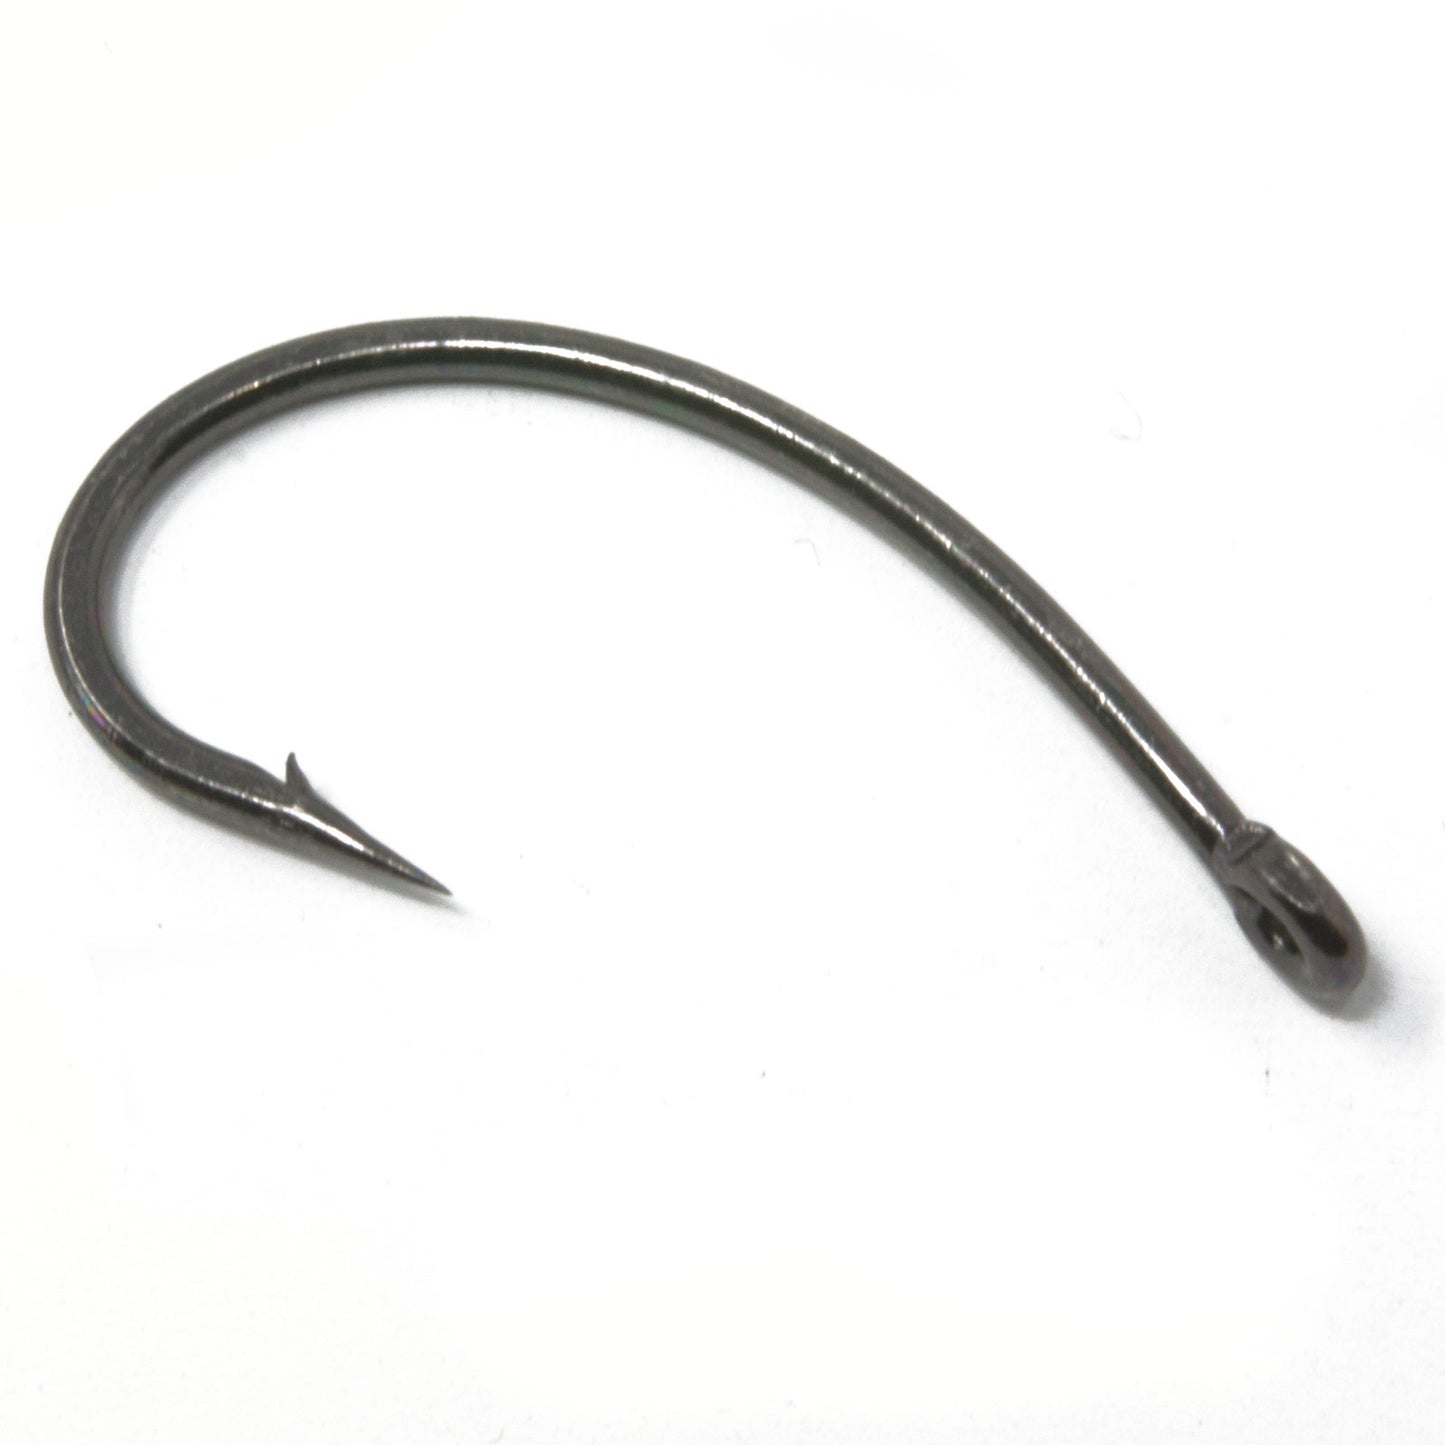 Curve Shank Professional Series Carp Fishing Hooks